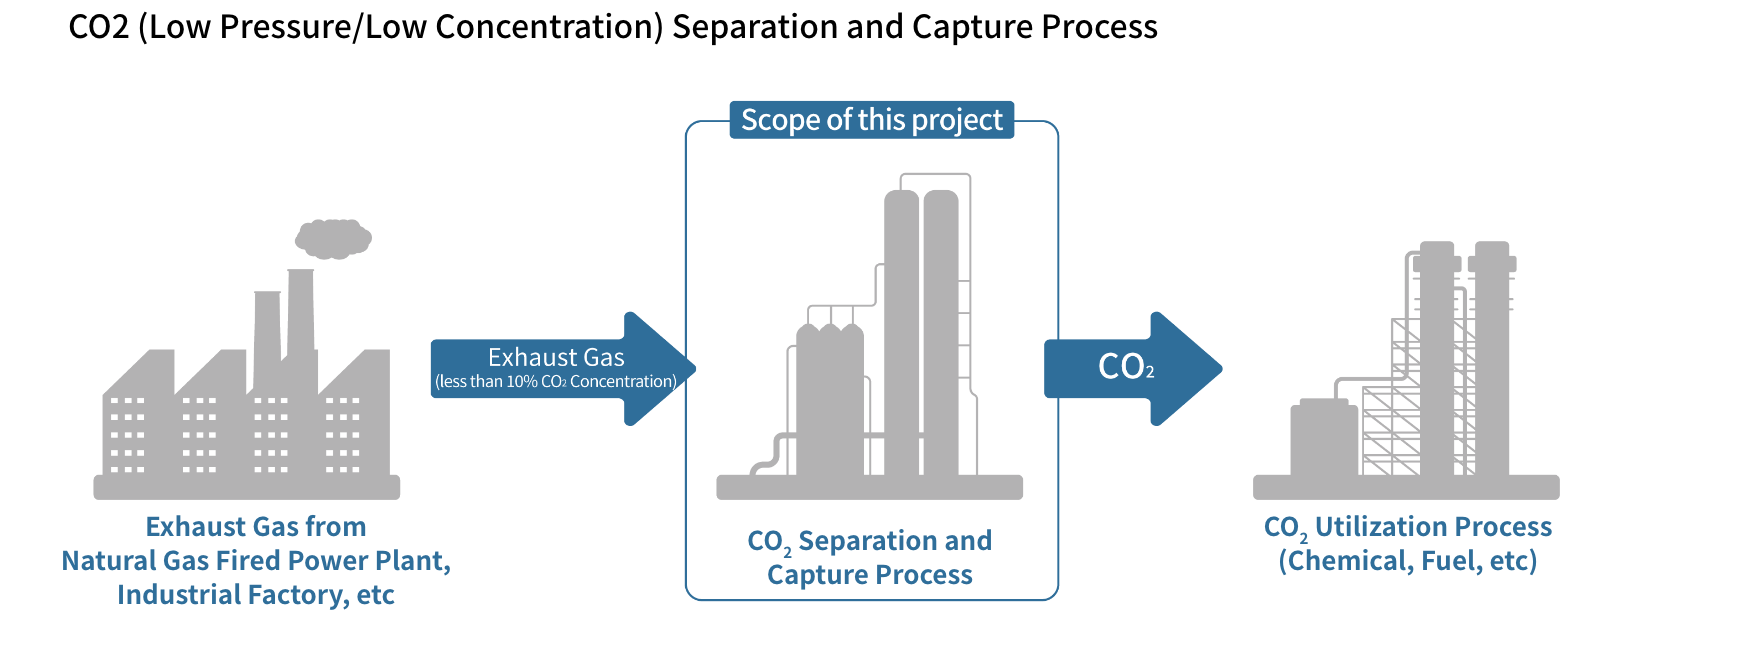 Development of Technology for CO2 Separation, Capture, etc.